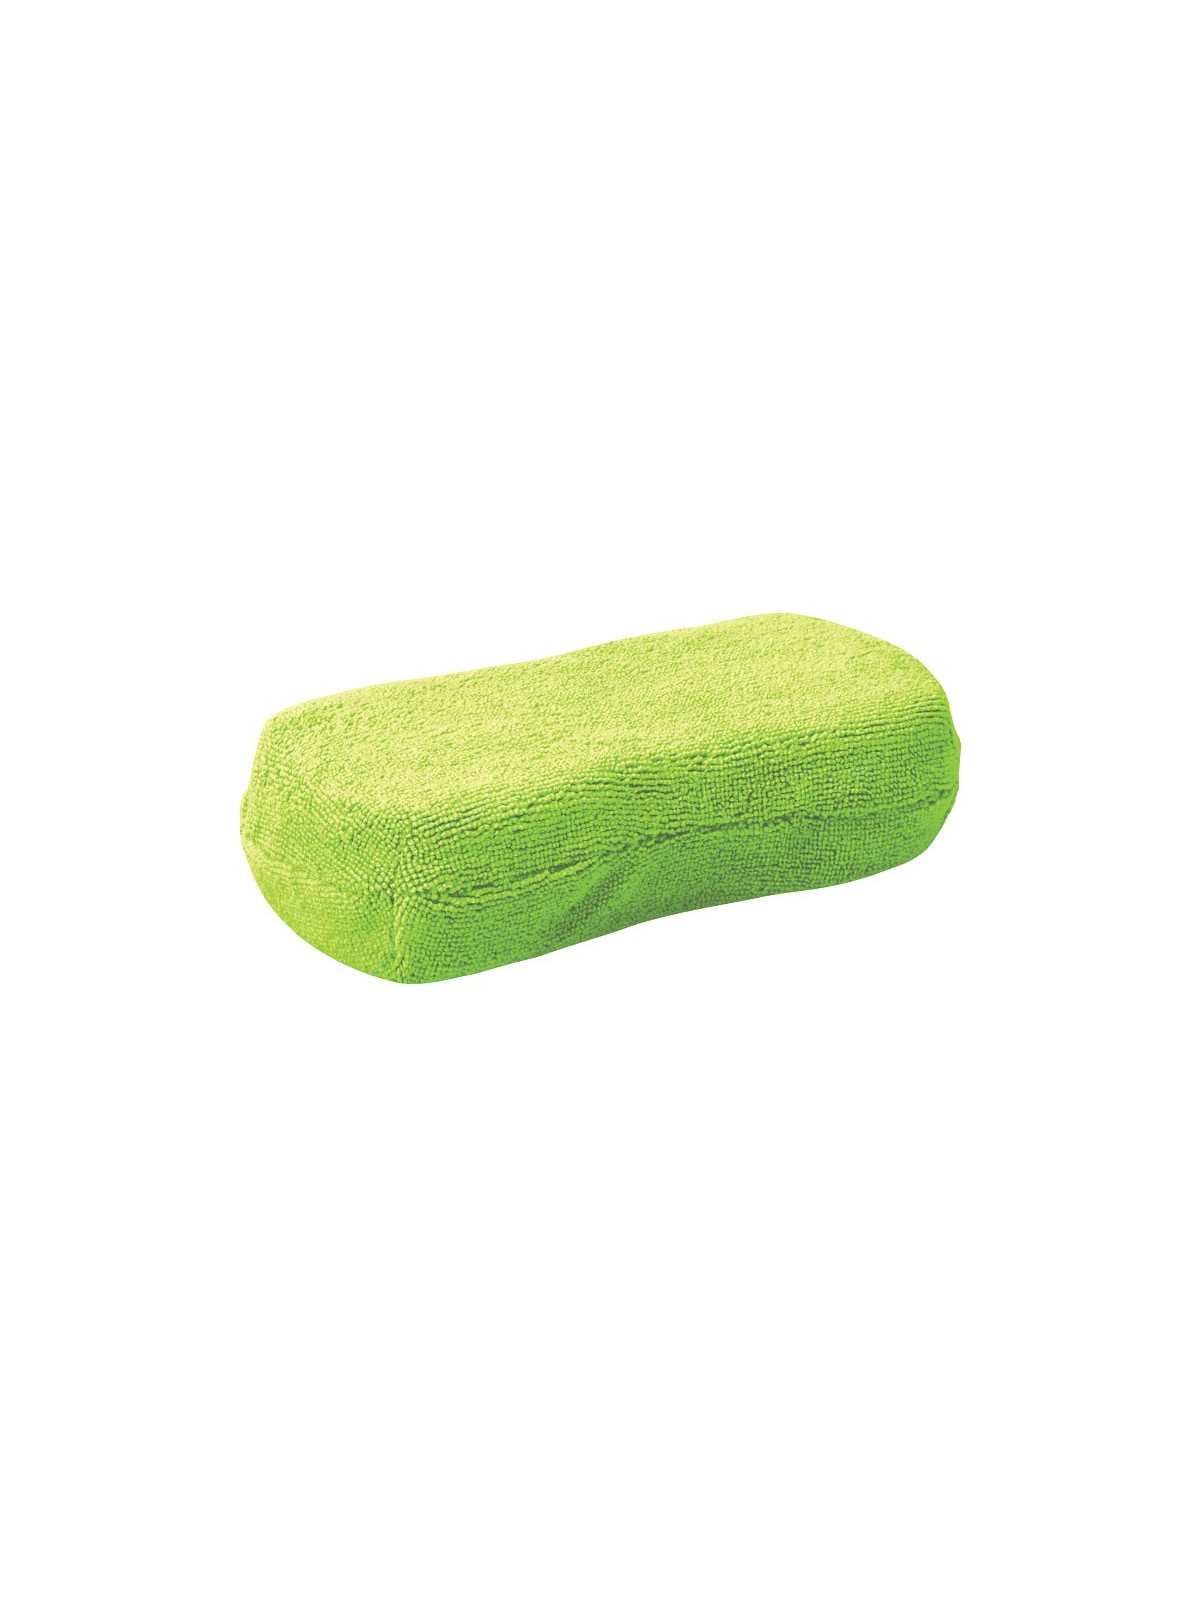 Microfiber Sponge lime green